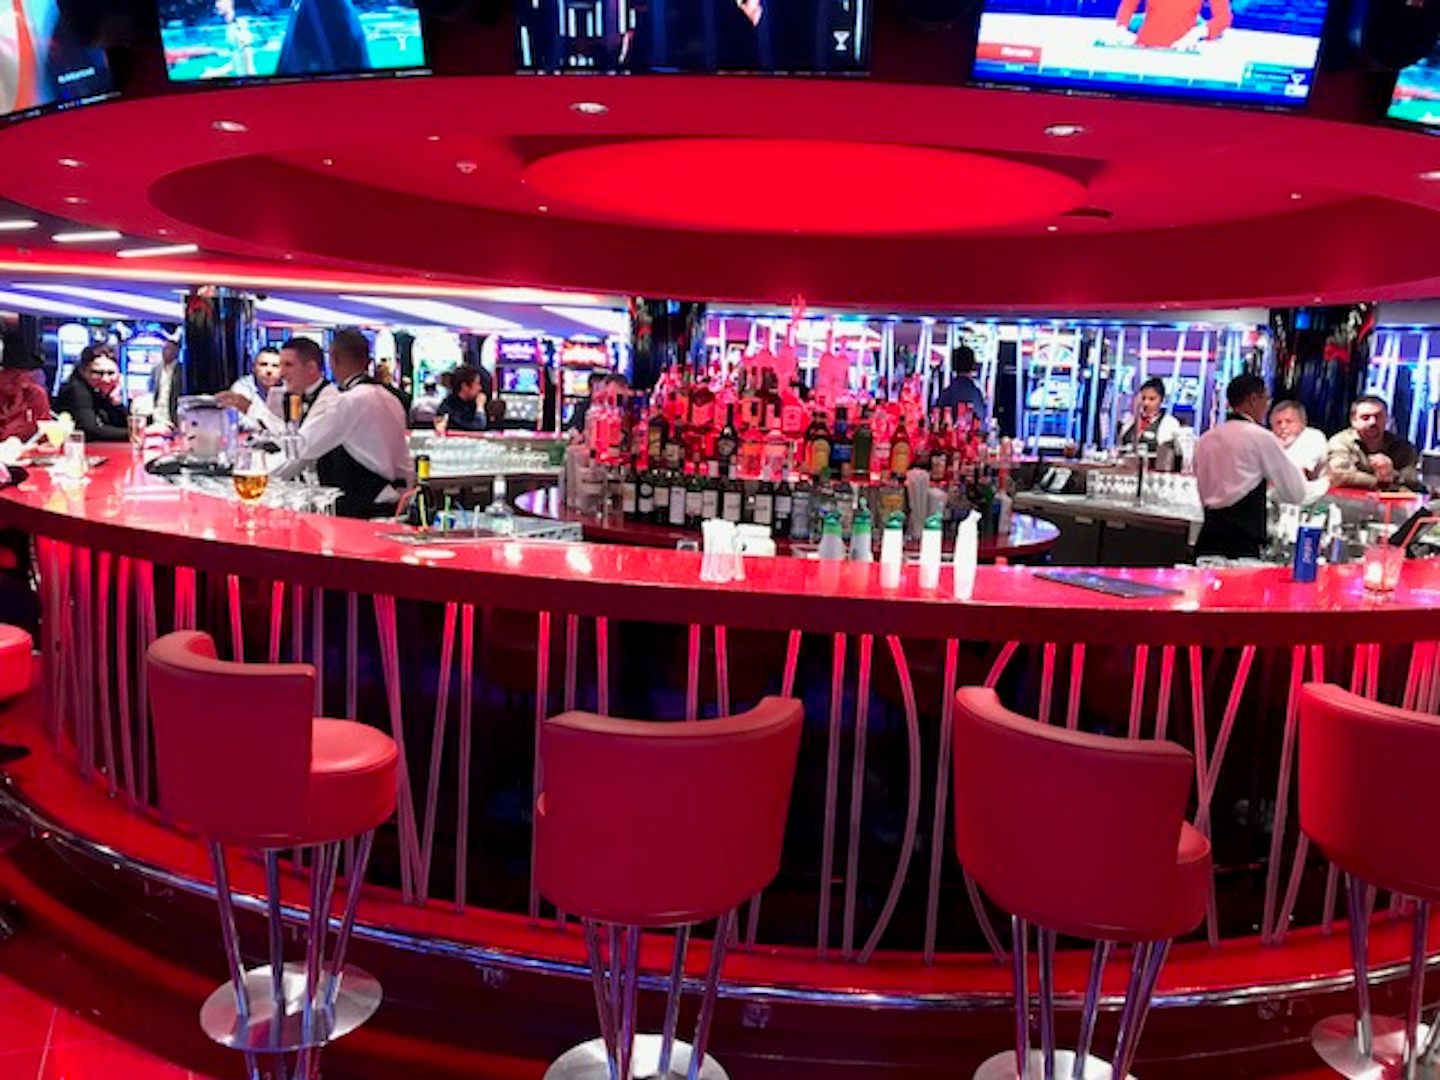 The casino bar